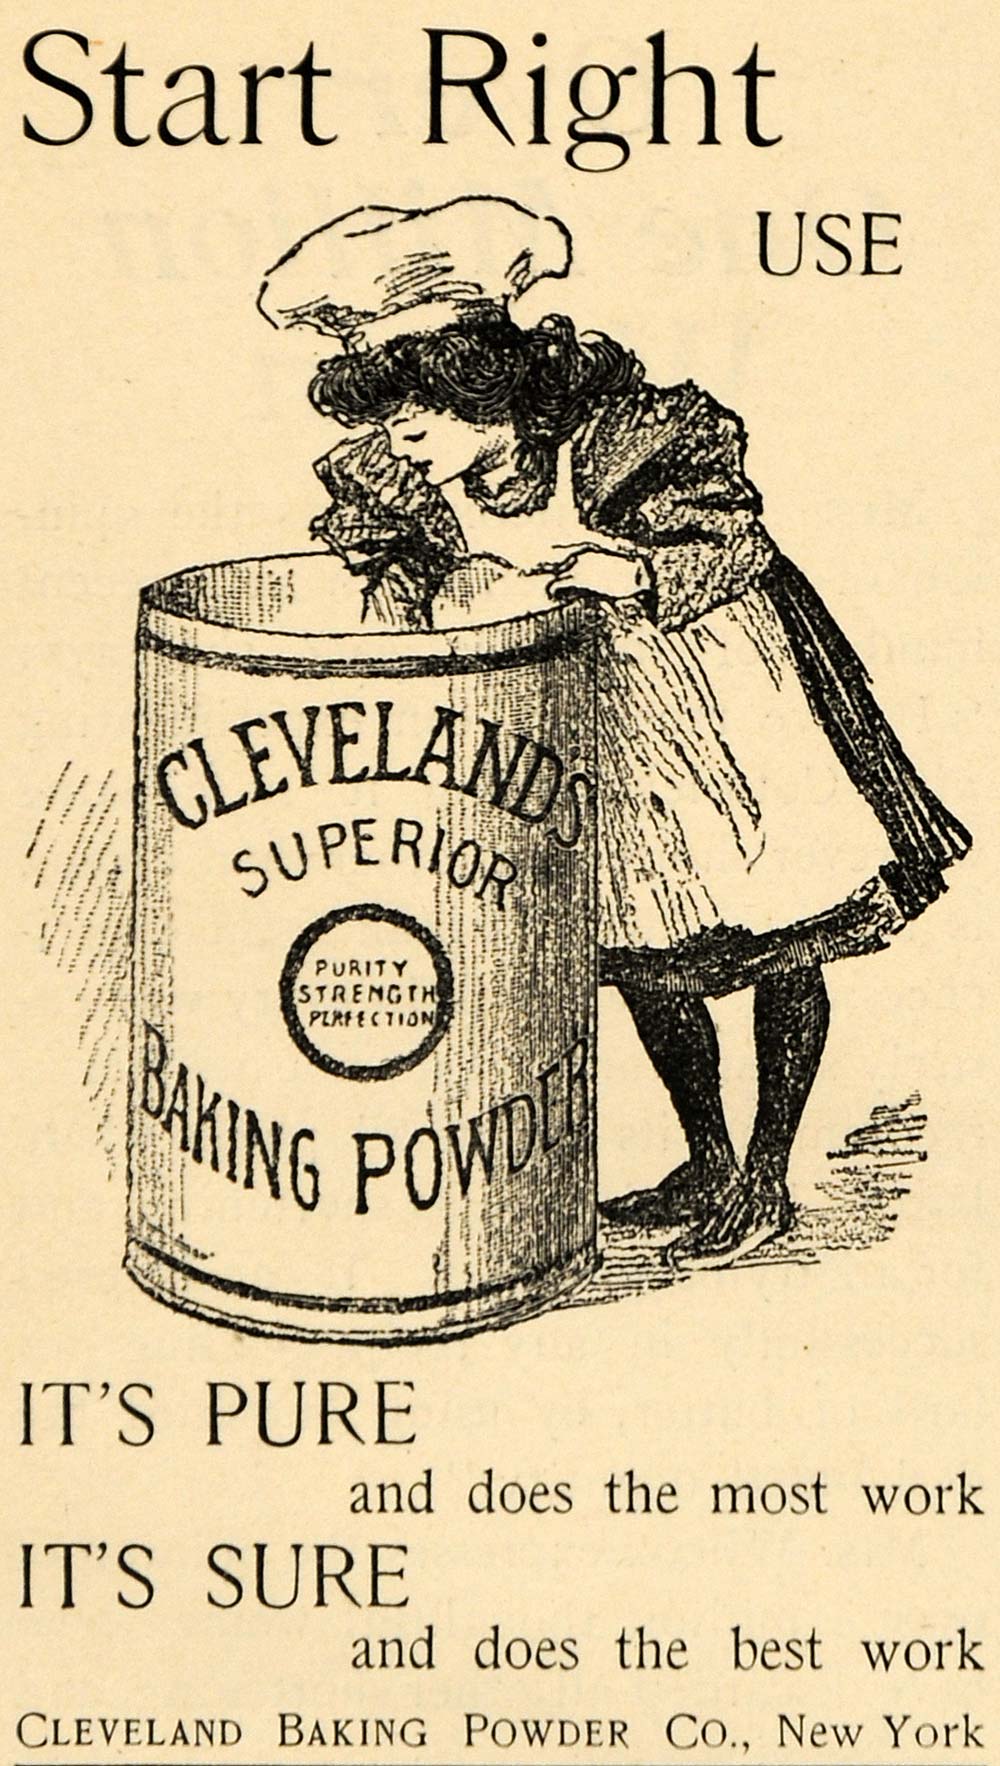 1895 Ad Cleveland Baking Powder Company Ingredients - ORIGINAL ADVERTISING LHJ4